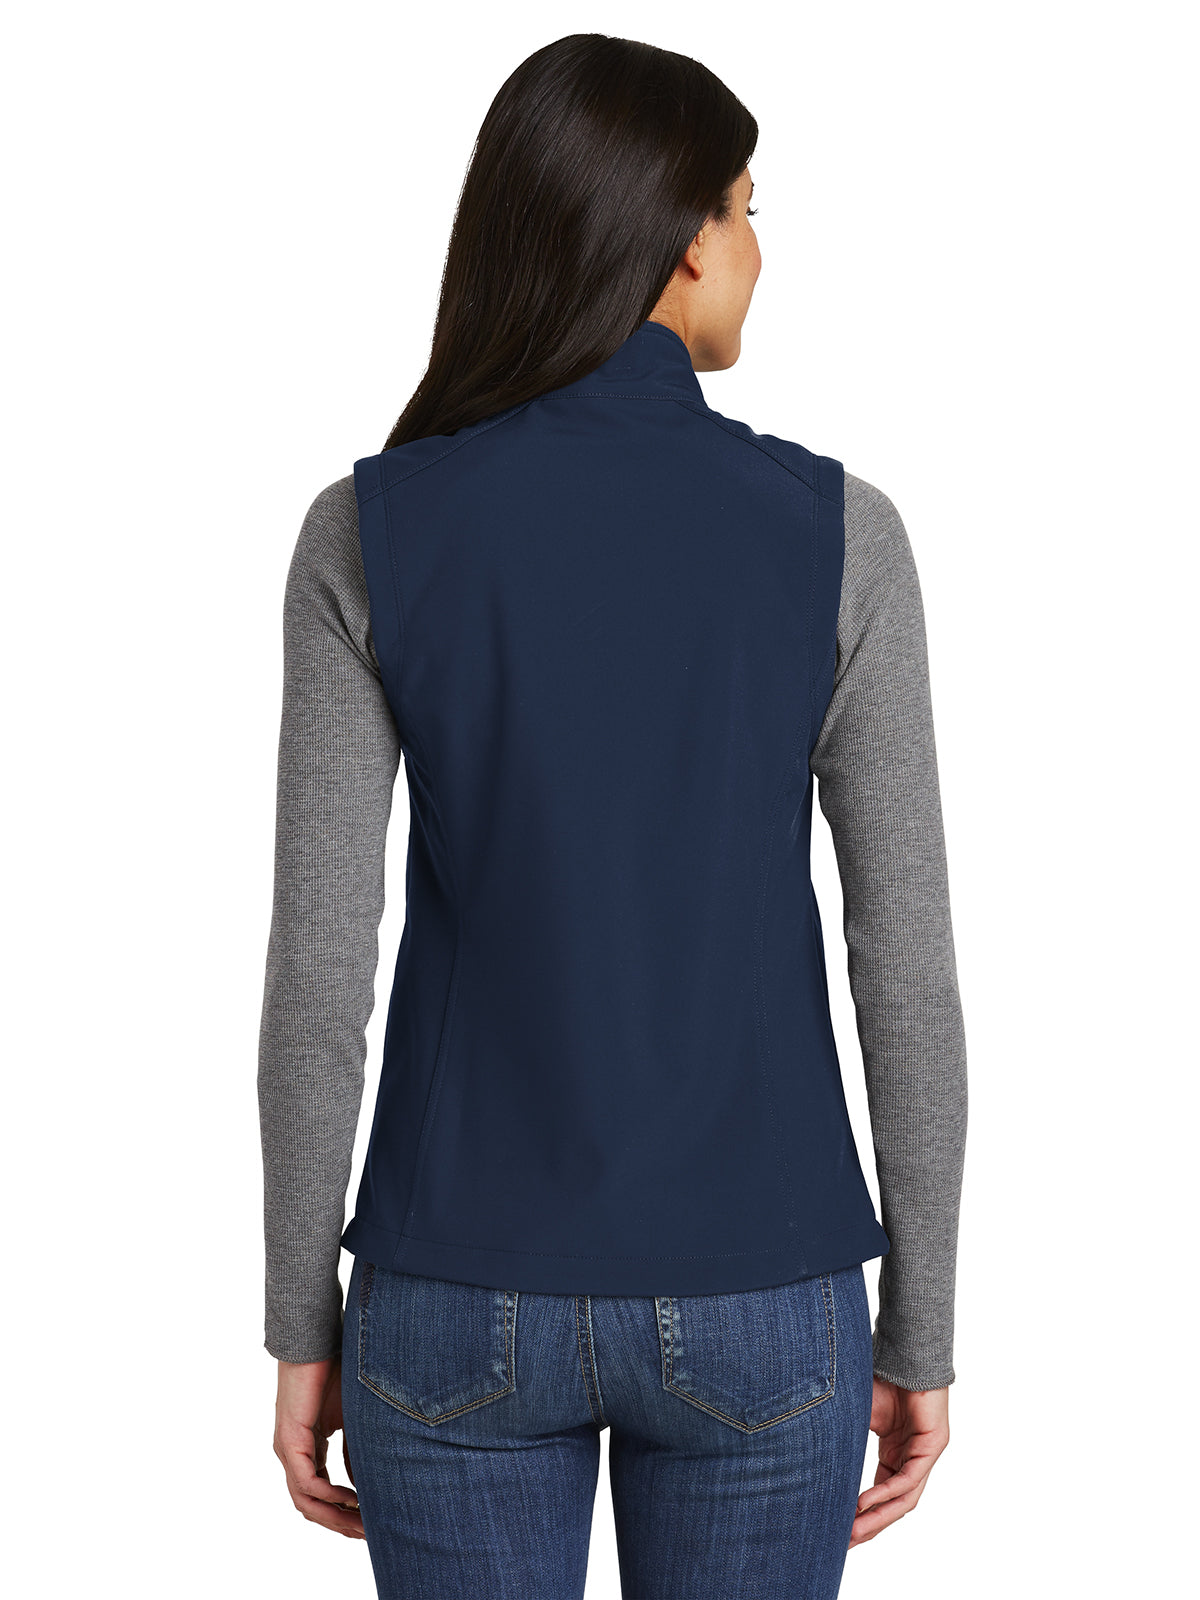 Women's Soft Shell Vest - L325 - Dress Blue Navy